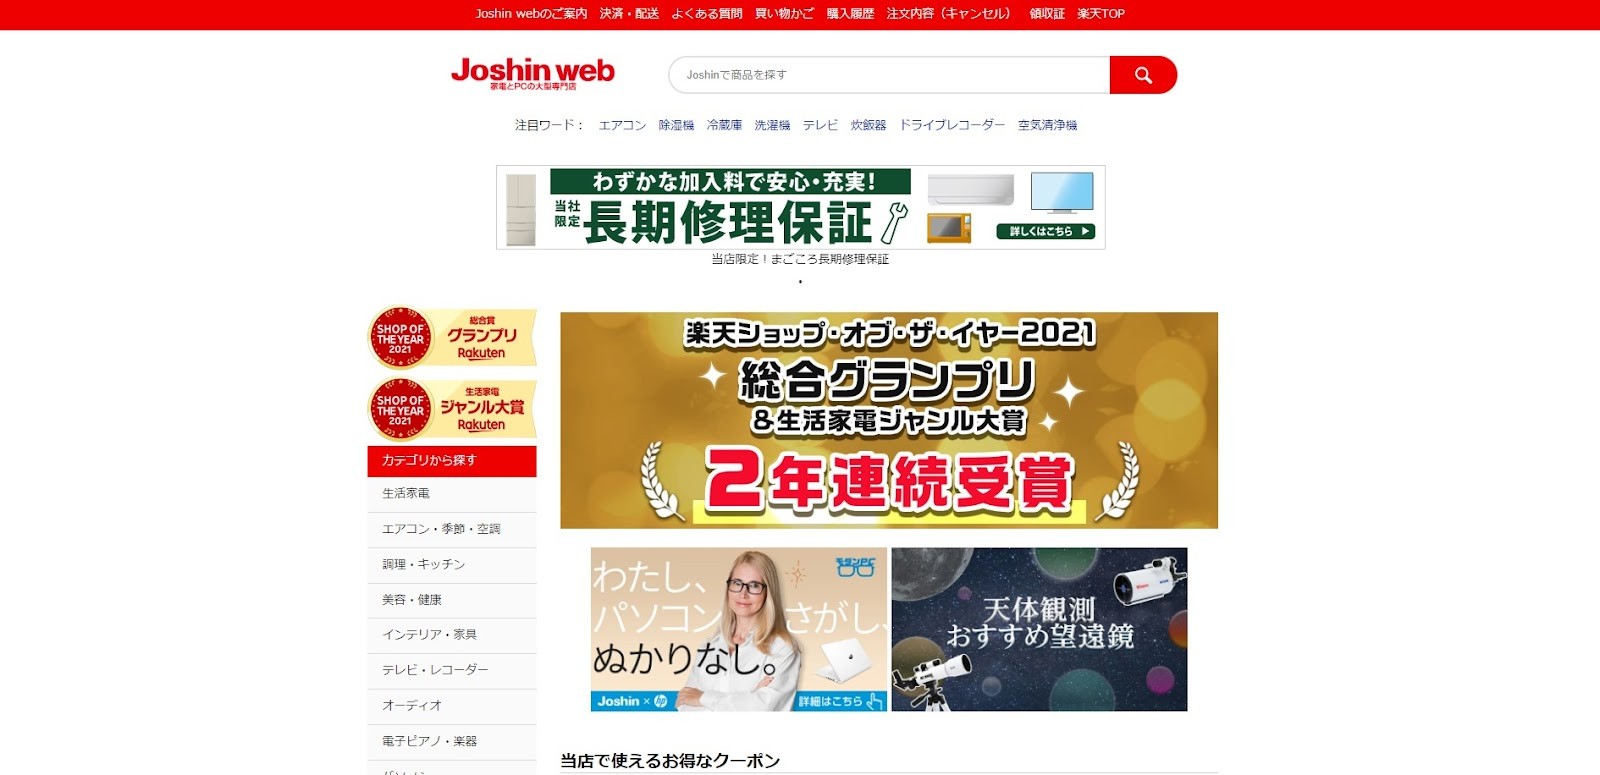 Joshin web 家電とPCの大型専門店 楽天市場店